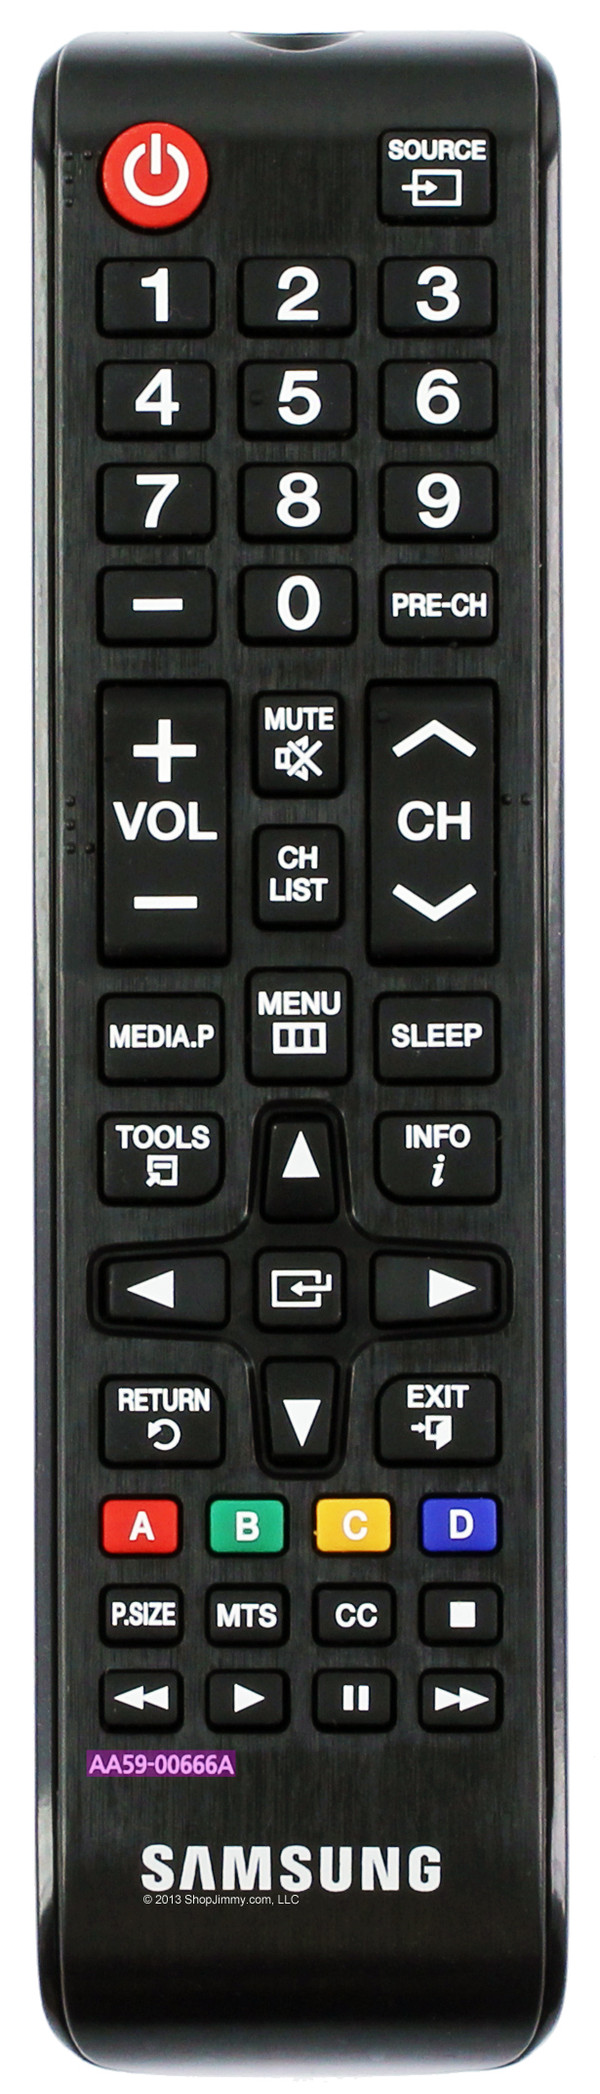 Samsung AA59-00666A Remote Control--NEW